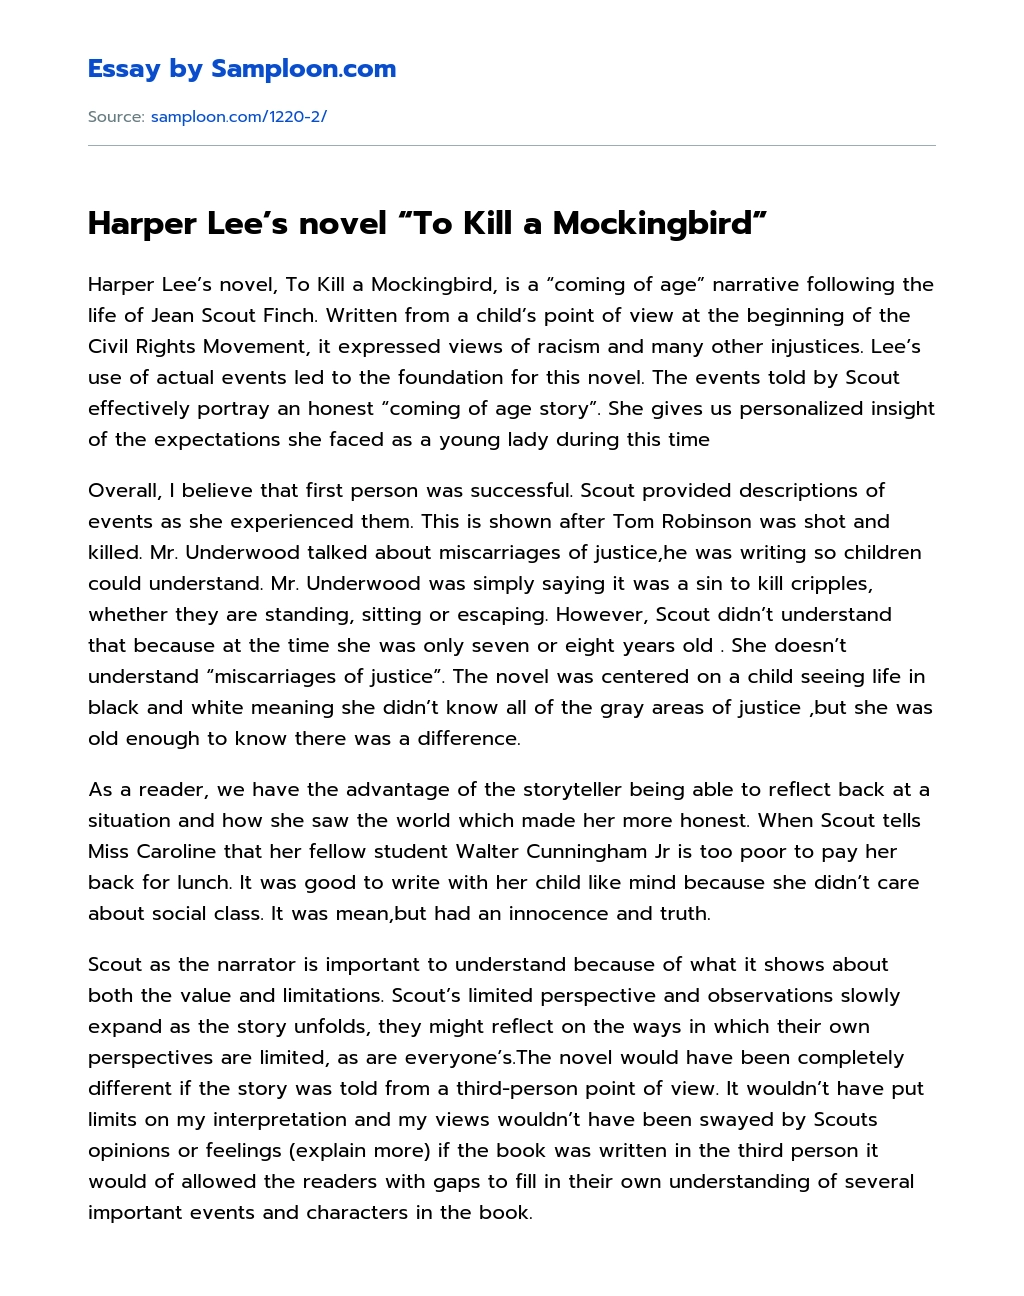 Harper Lee’s novel “To Kill a Mockingbird” essay